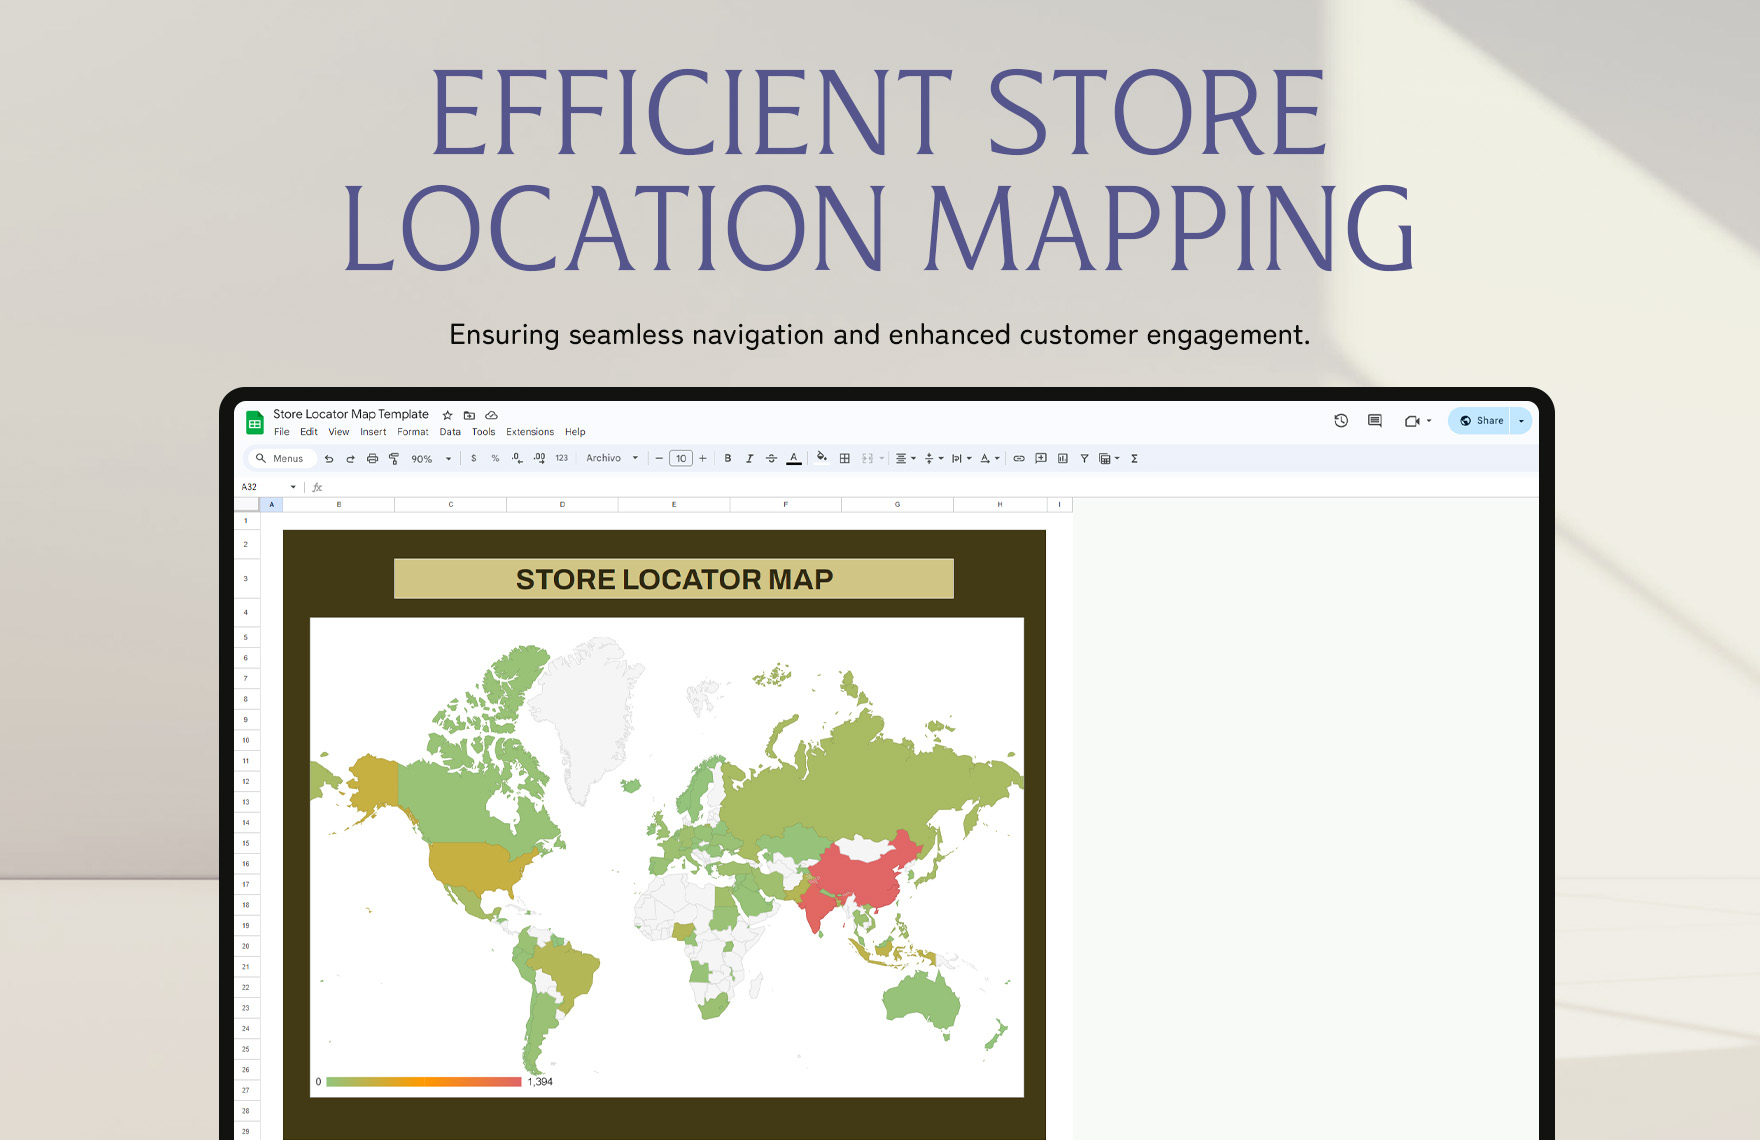 Store Locator Map Template